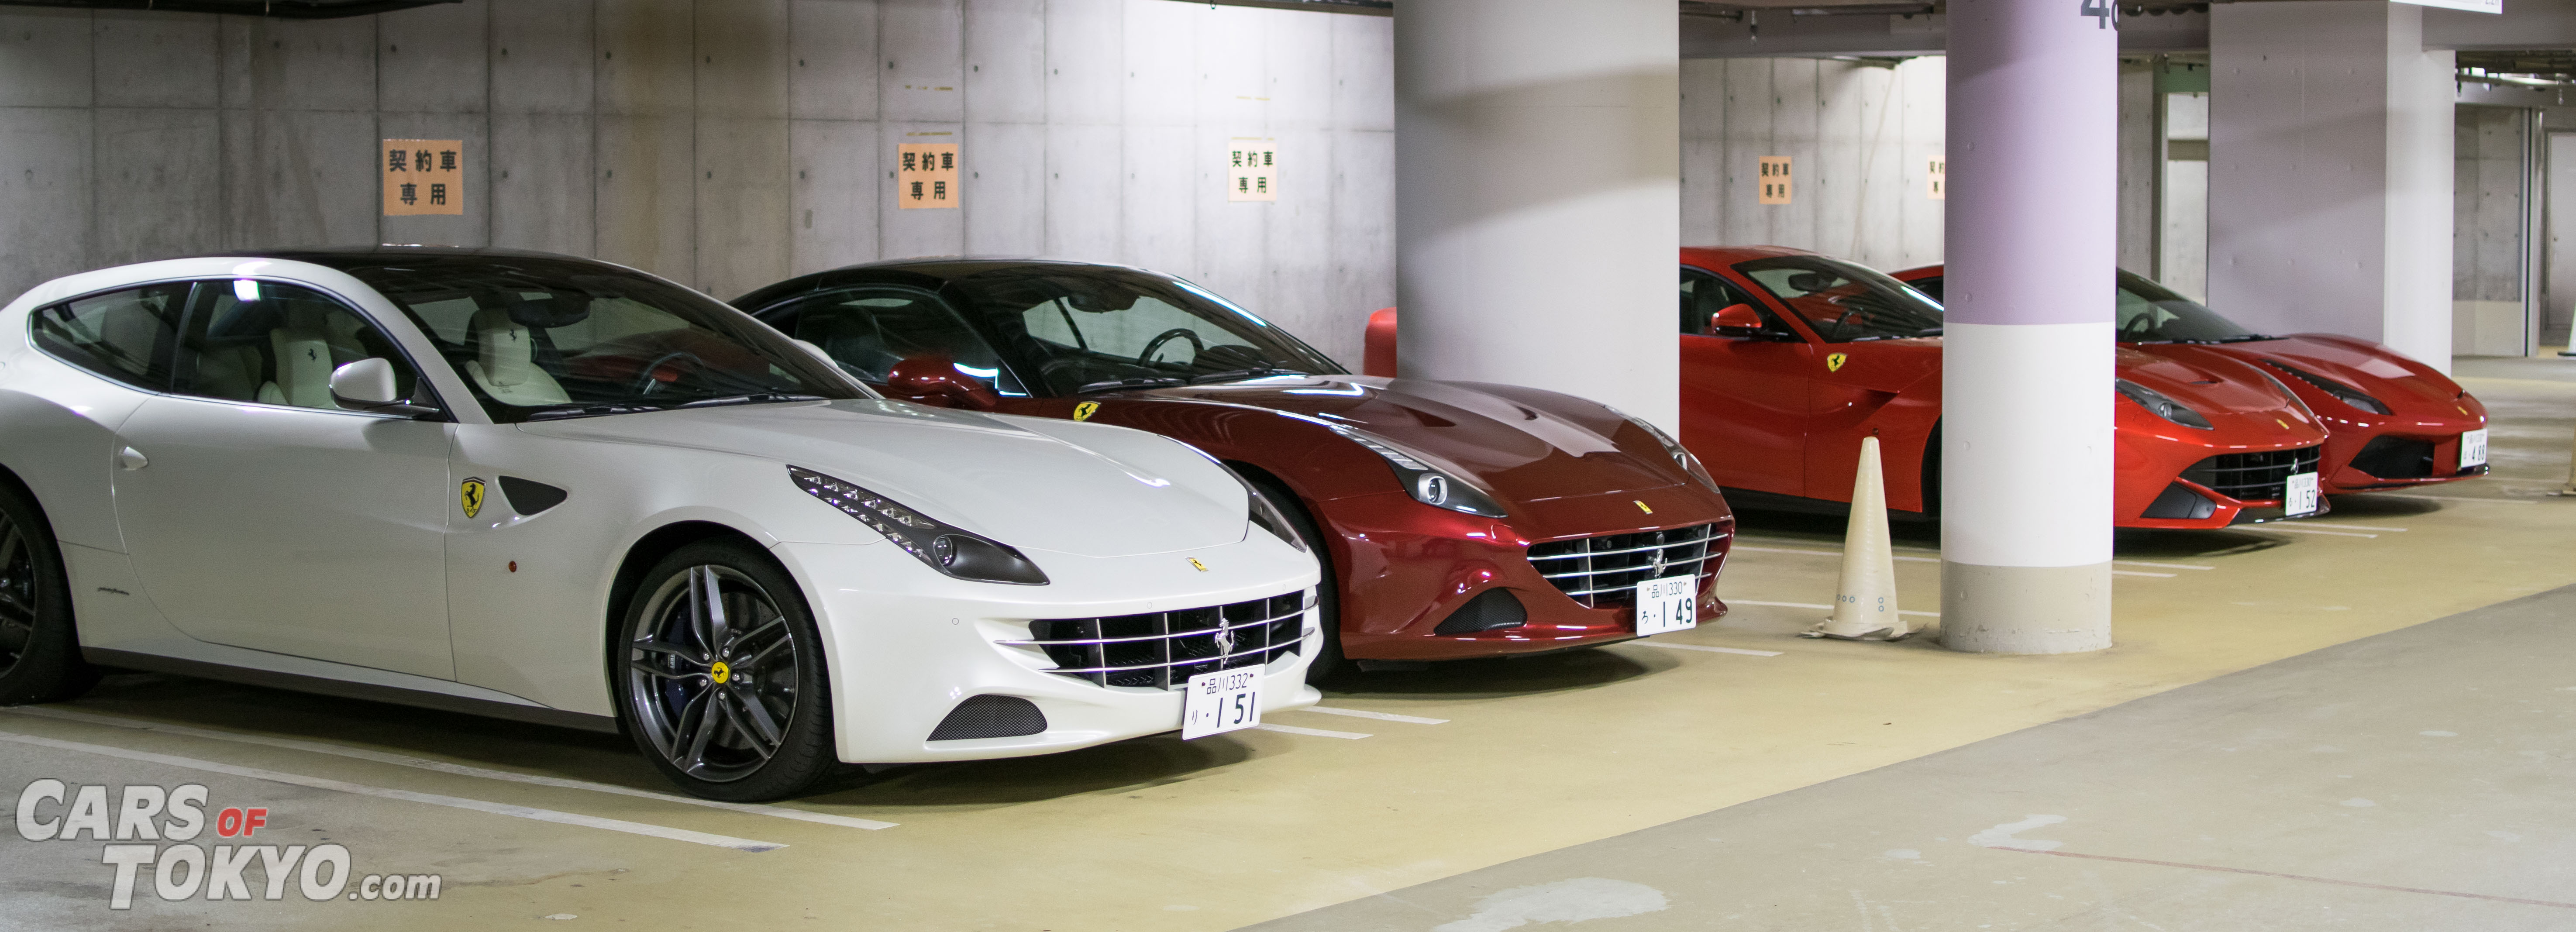 Cars of Tokyo Underground Ferrari